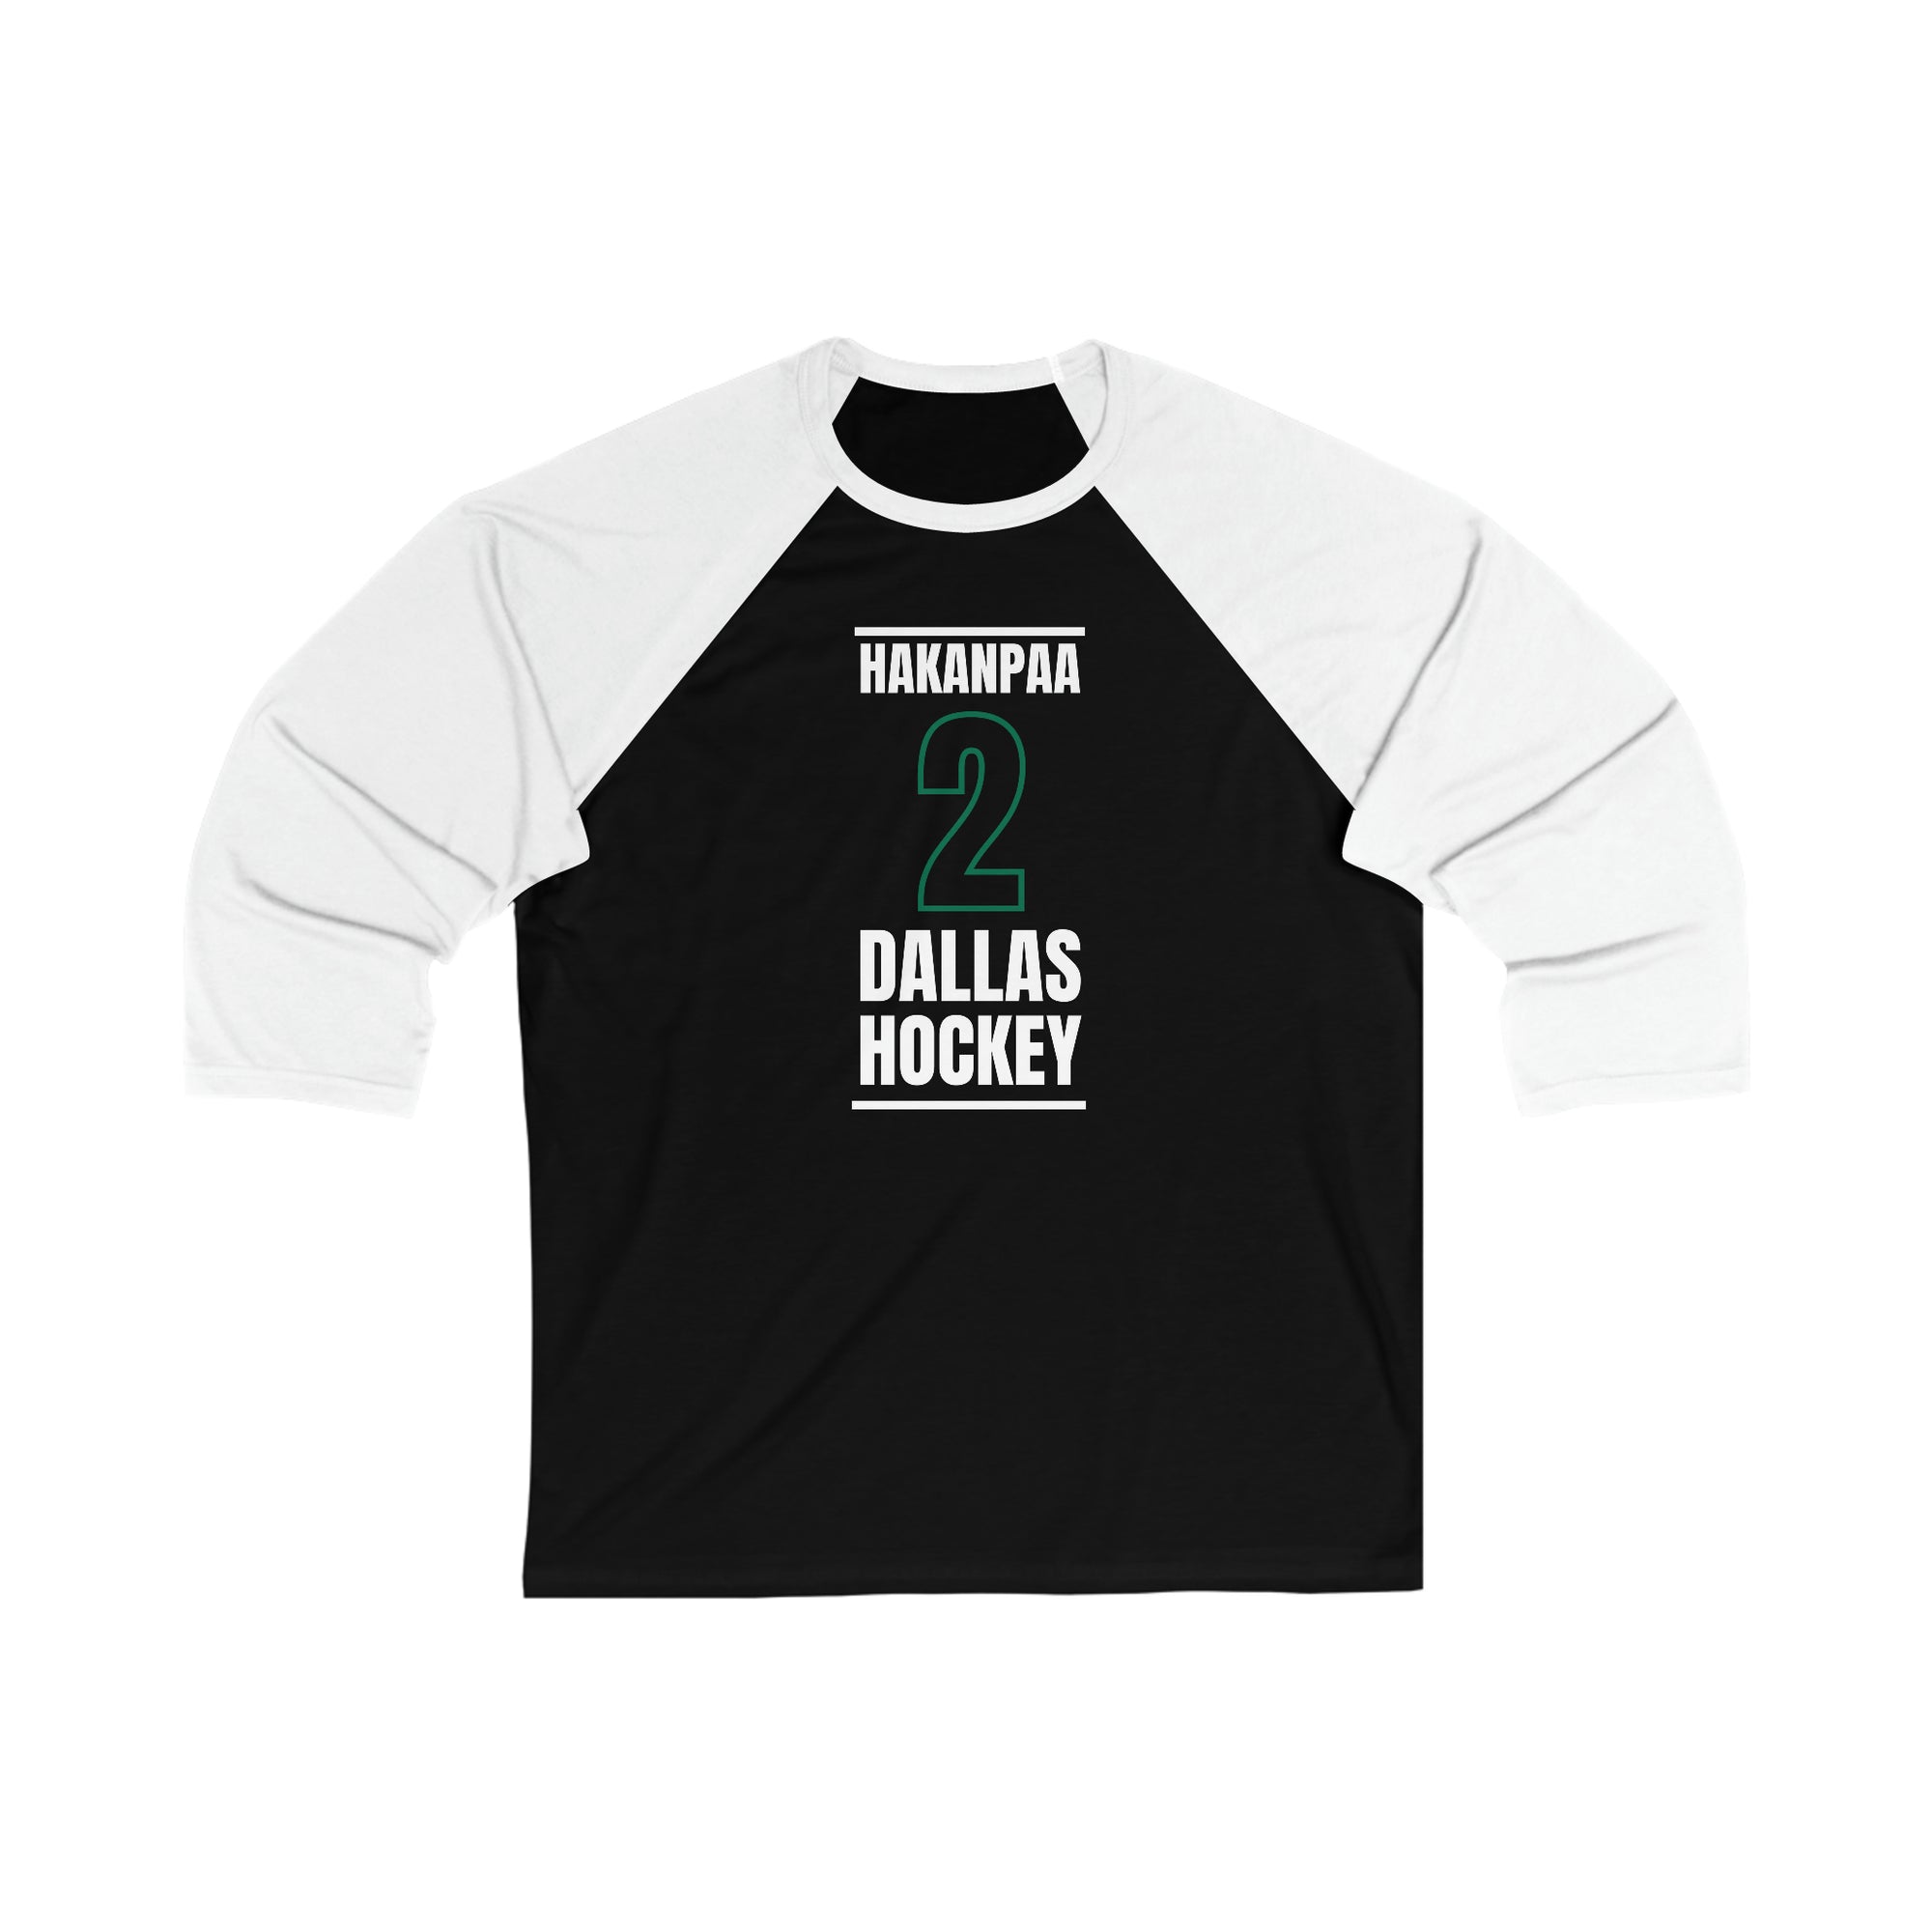 Jani Hakanpaa - Dallas Teams Store